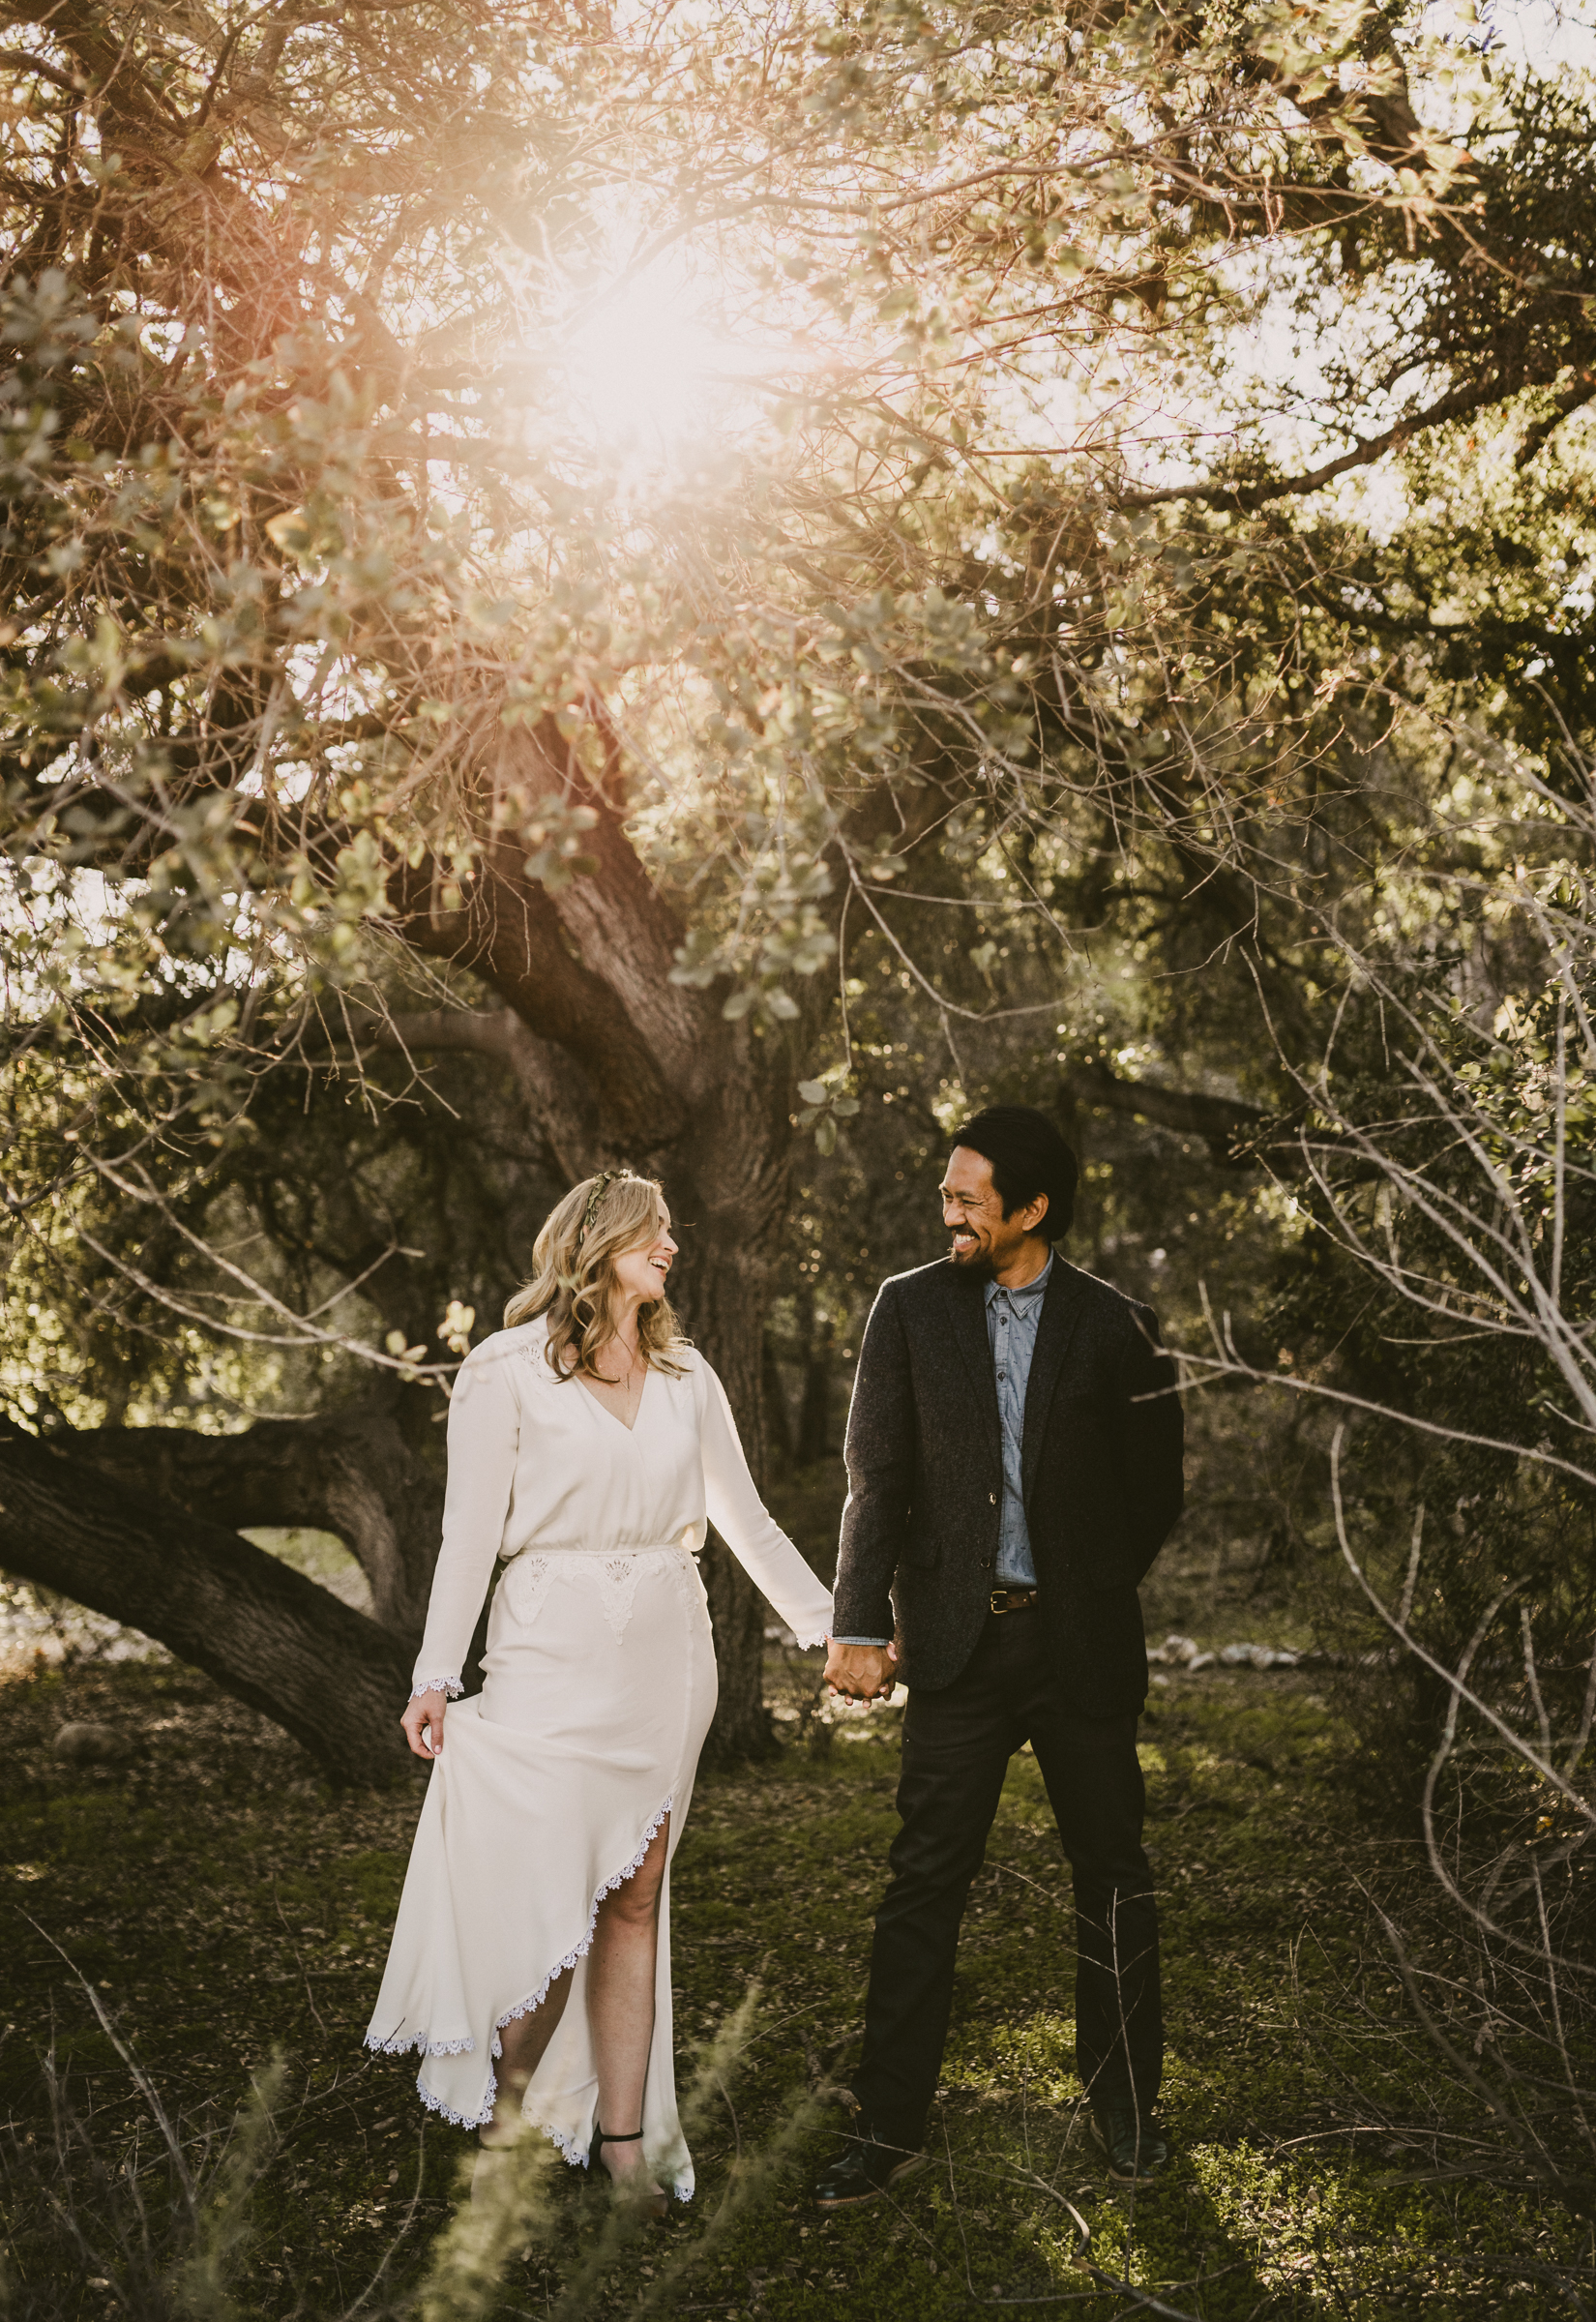 ©Isaiah + Taylor Photography - Intimate Elopement, Eaton Canyon, Los Angeles Wedding Photographer-23.jpg